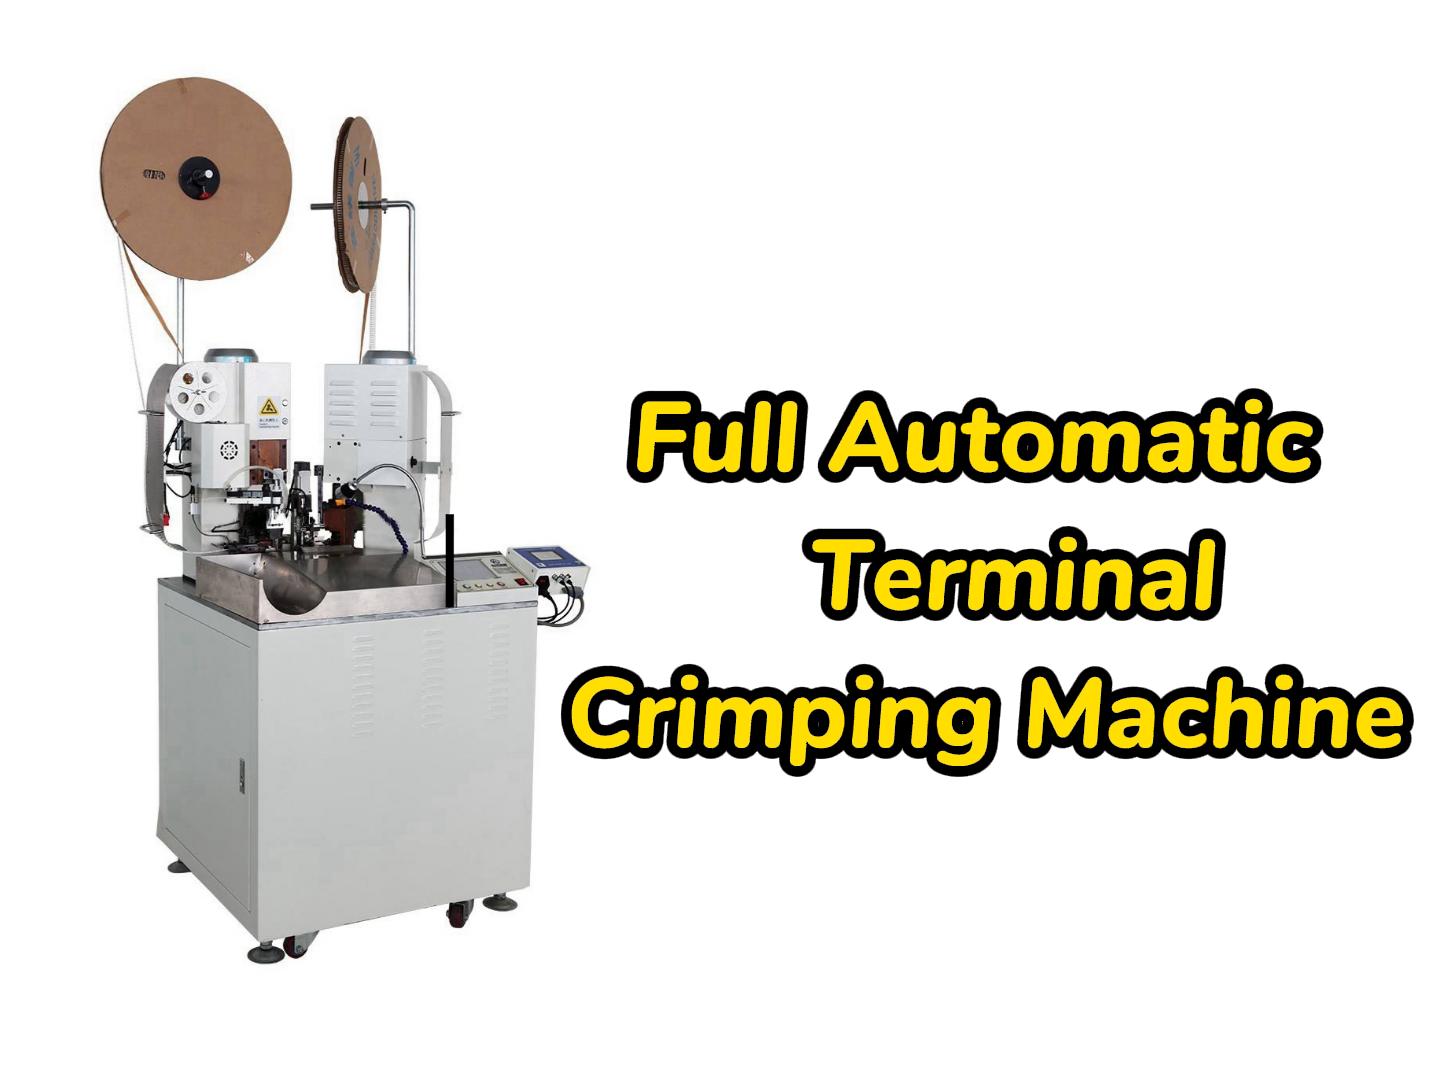 Full Automatic Terminal Crimping Machine